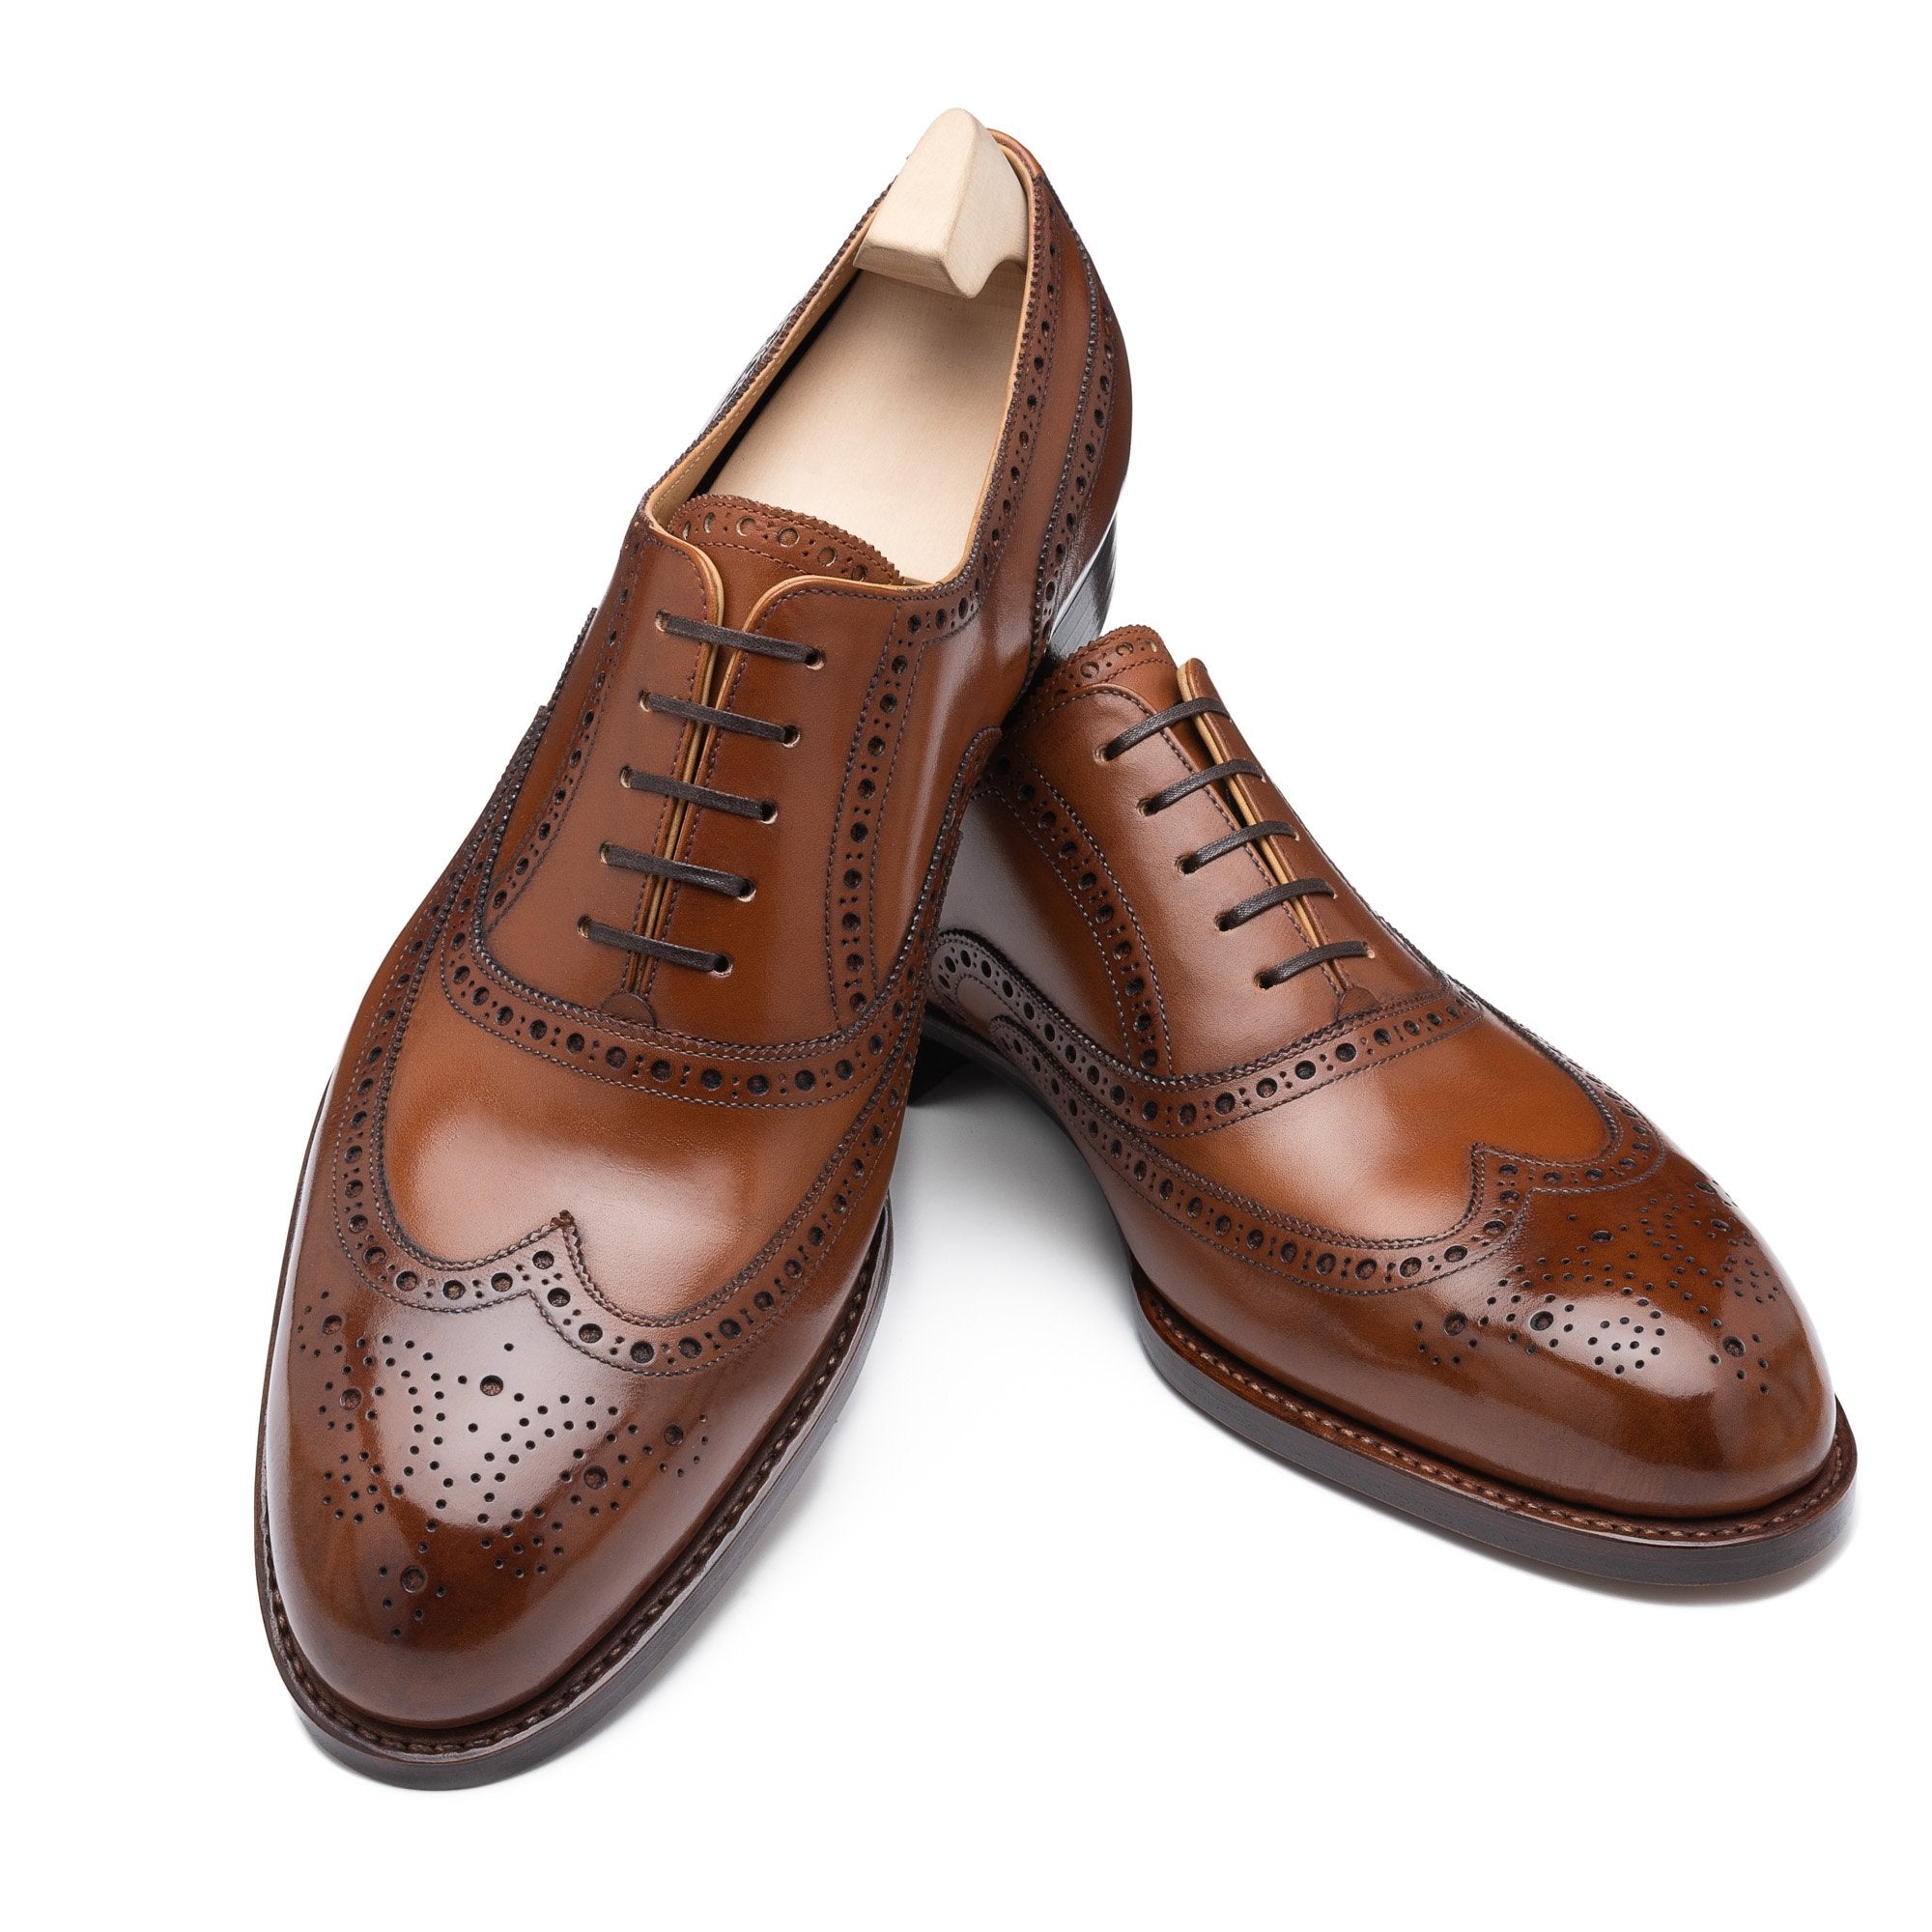 PASSUS SHOES "Jacob" Hand-made Full Brogue Box Calf Shoes 11.5 NEW 44.5 PASSUS SHOES